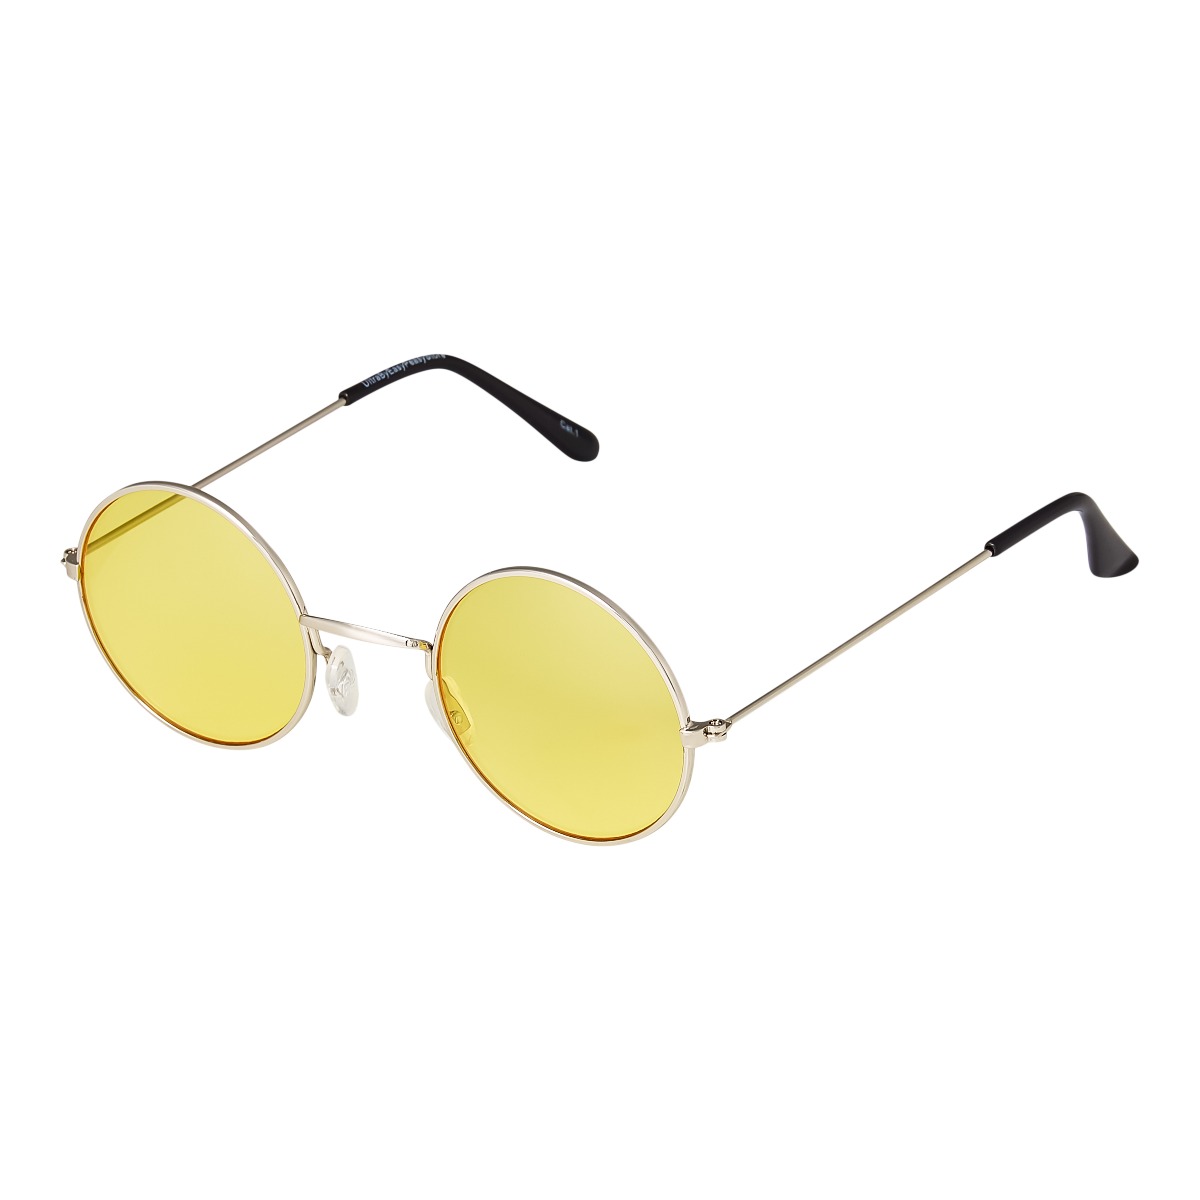 Buy JOHN LENNON SUNGLASSES Polarized Round Sunglasses (Gold)  (HOBJLGLDBIGBLU2) at Amazon.in